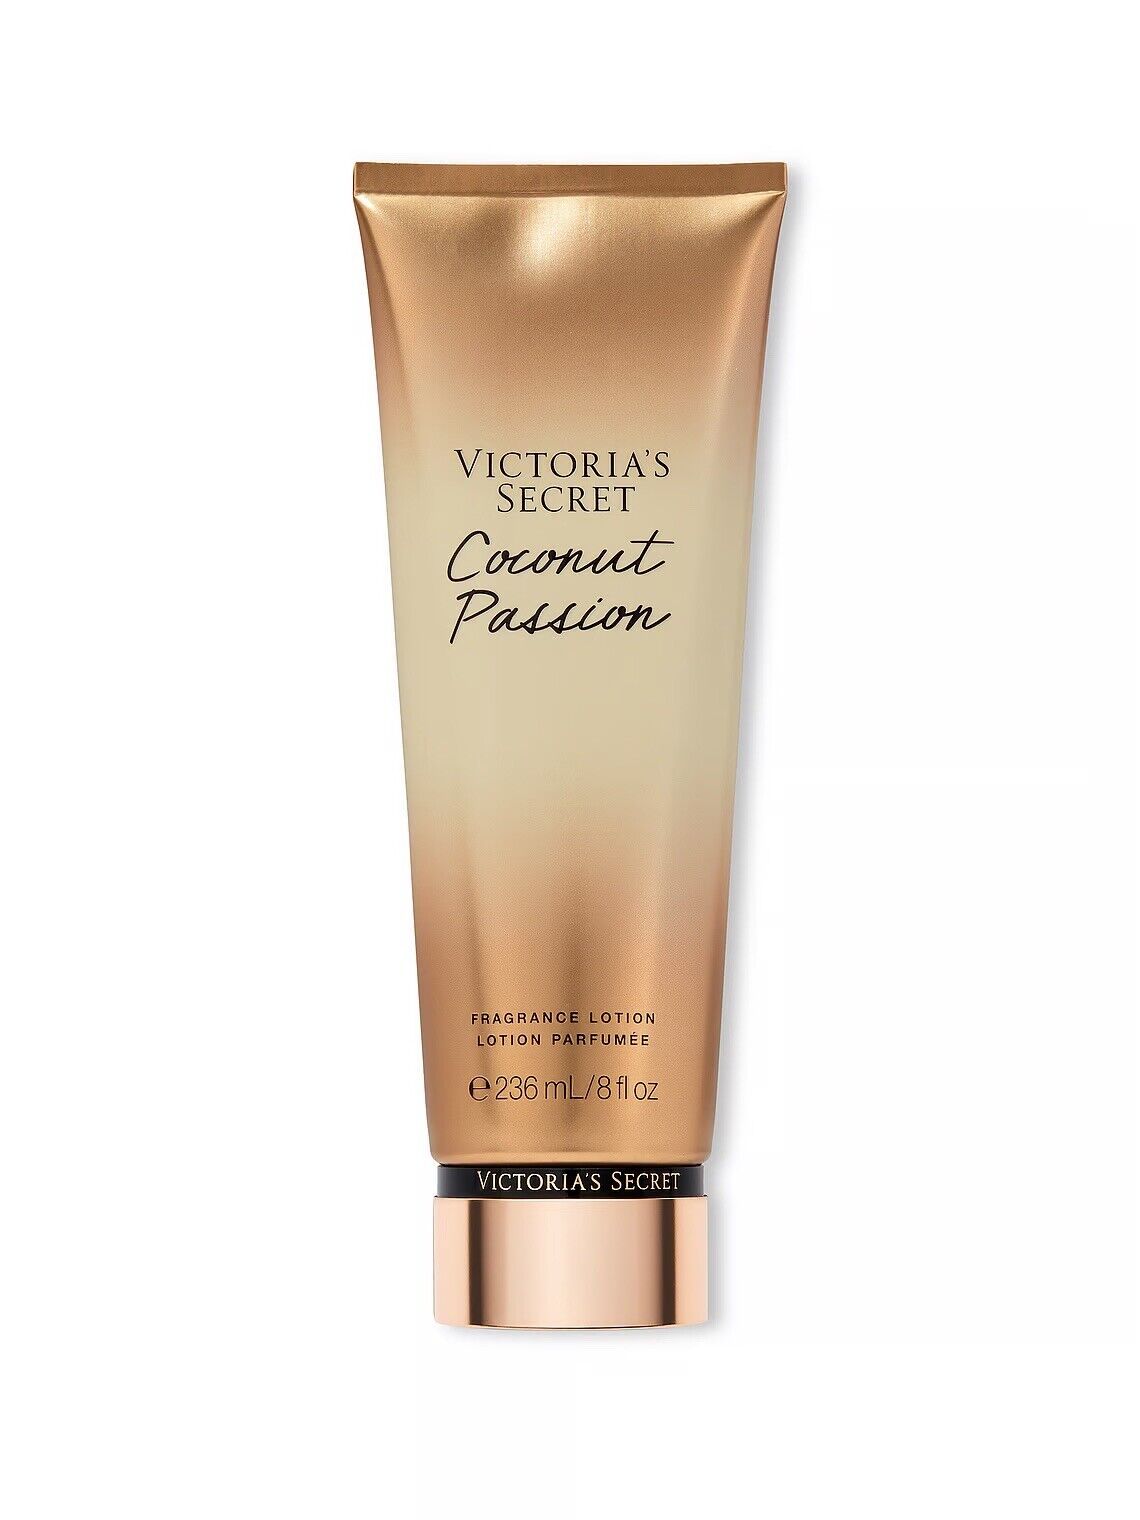 NEW Victoria\'s Secret COCONUT PASSION Fragrance Body Lotion 8 oz